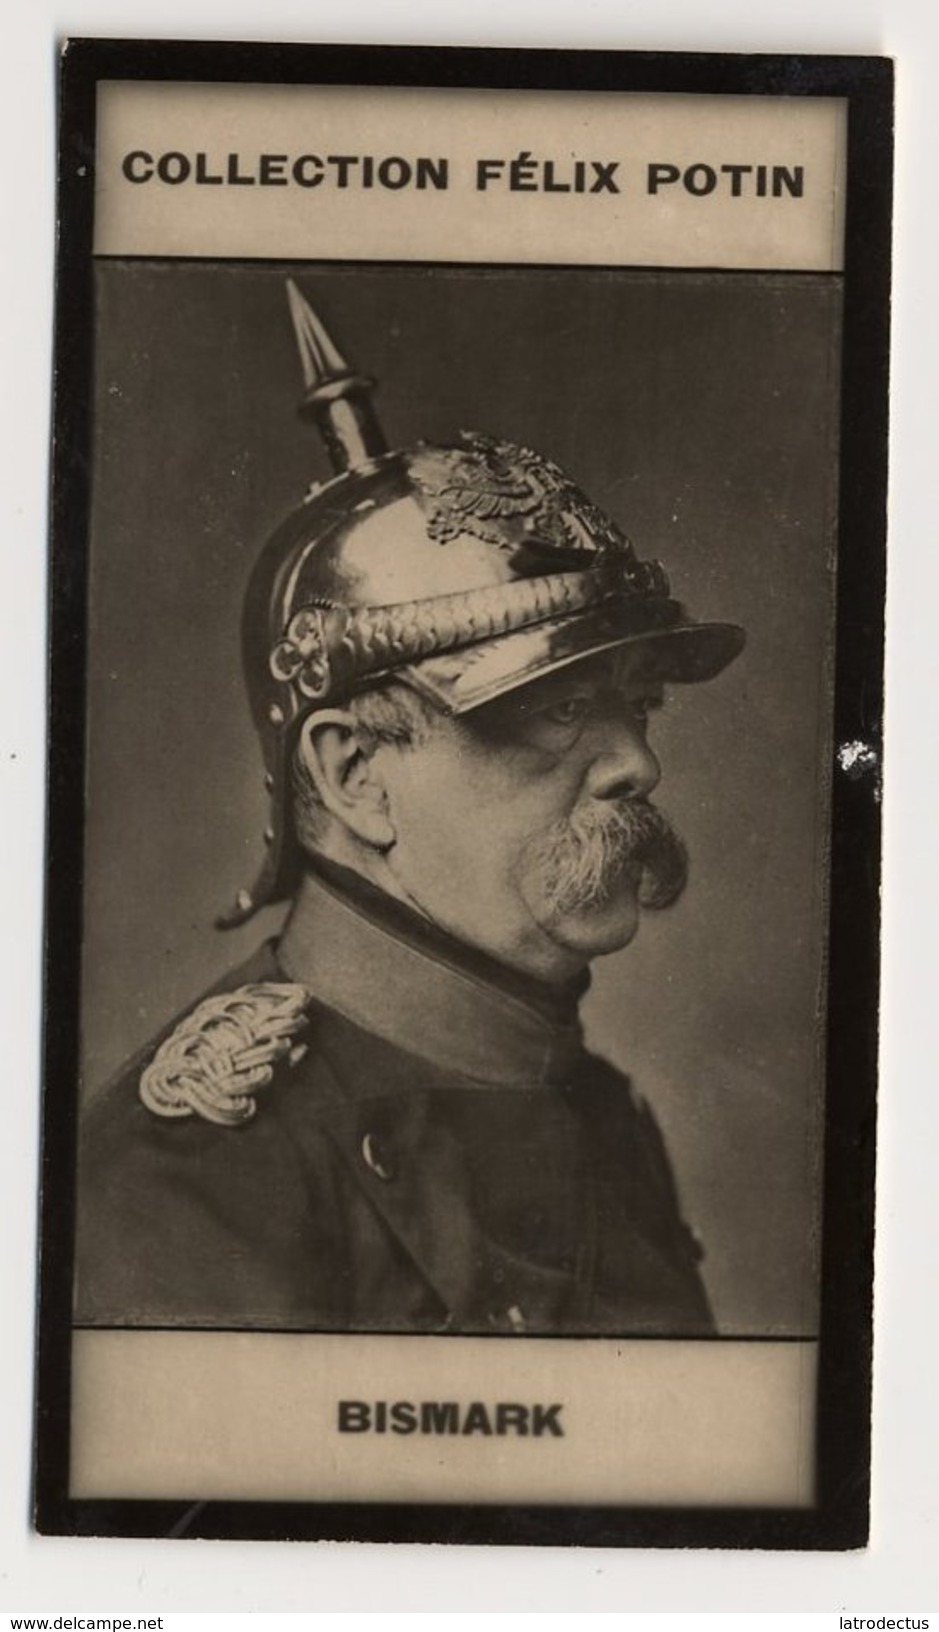 Collection Felix Potin - 1898 - REAL PHOTO - Prince De Bismark, Otto Von Bismarck-Schönhausen - Félix Potin